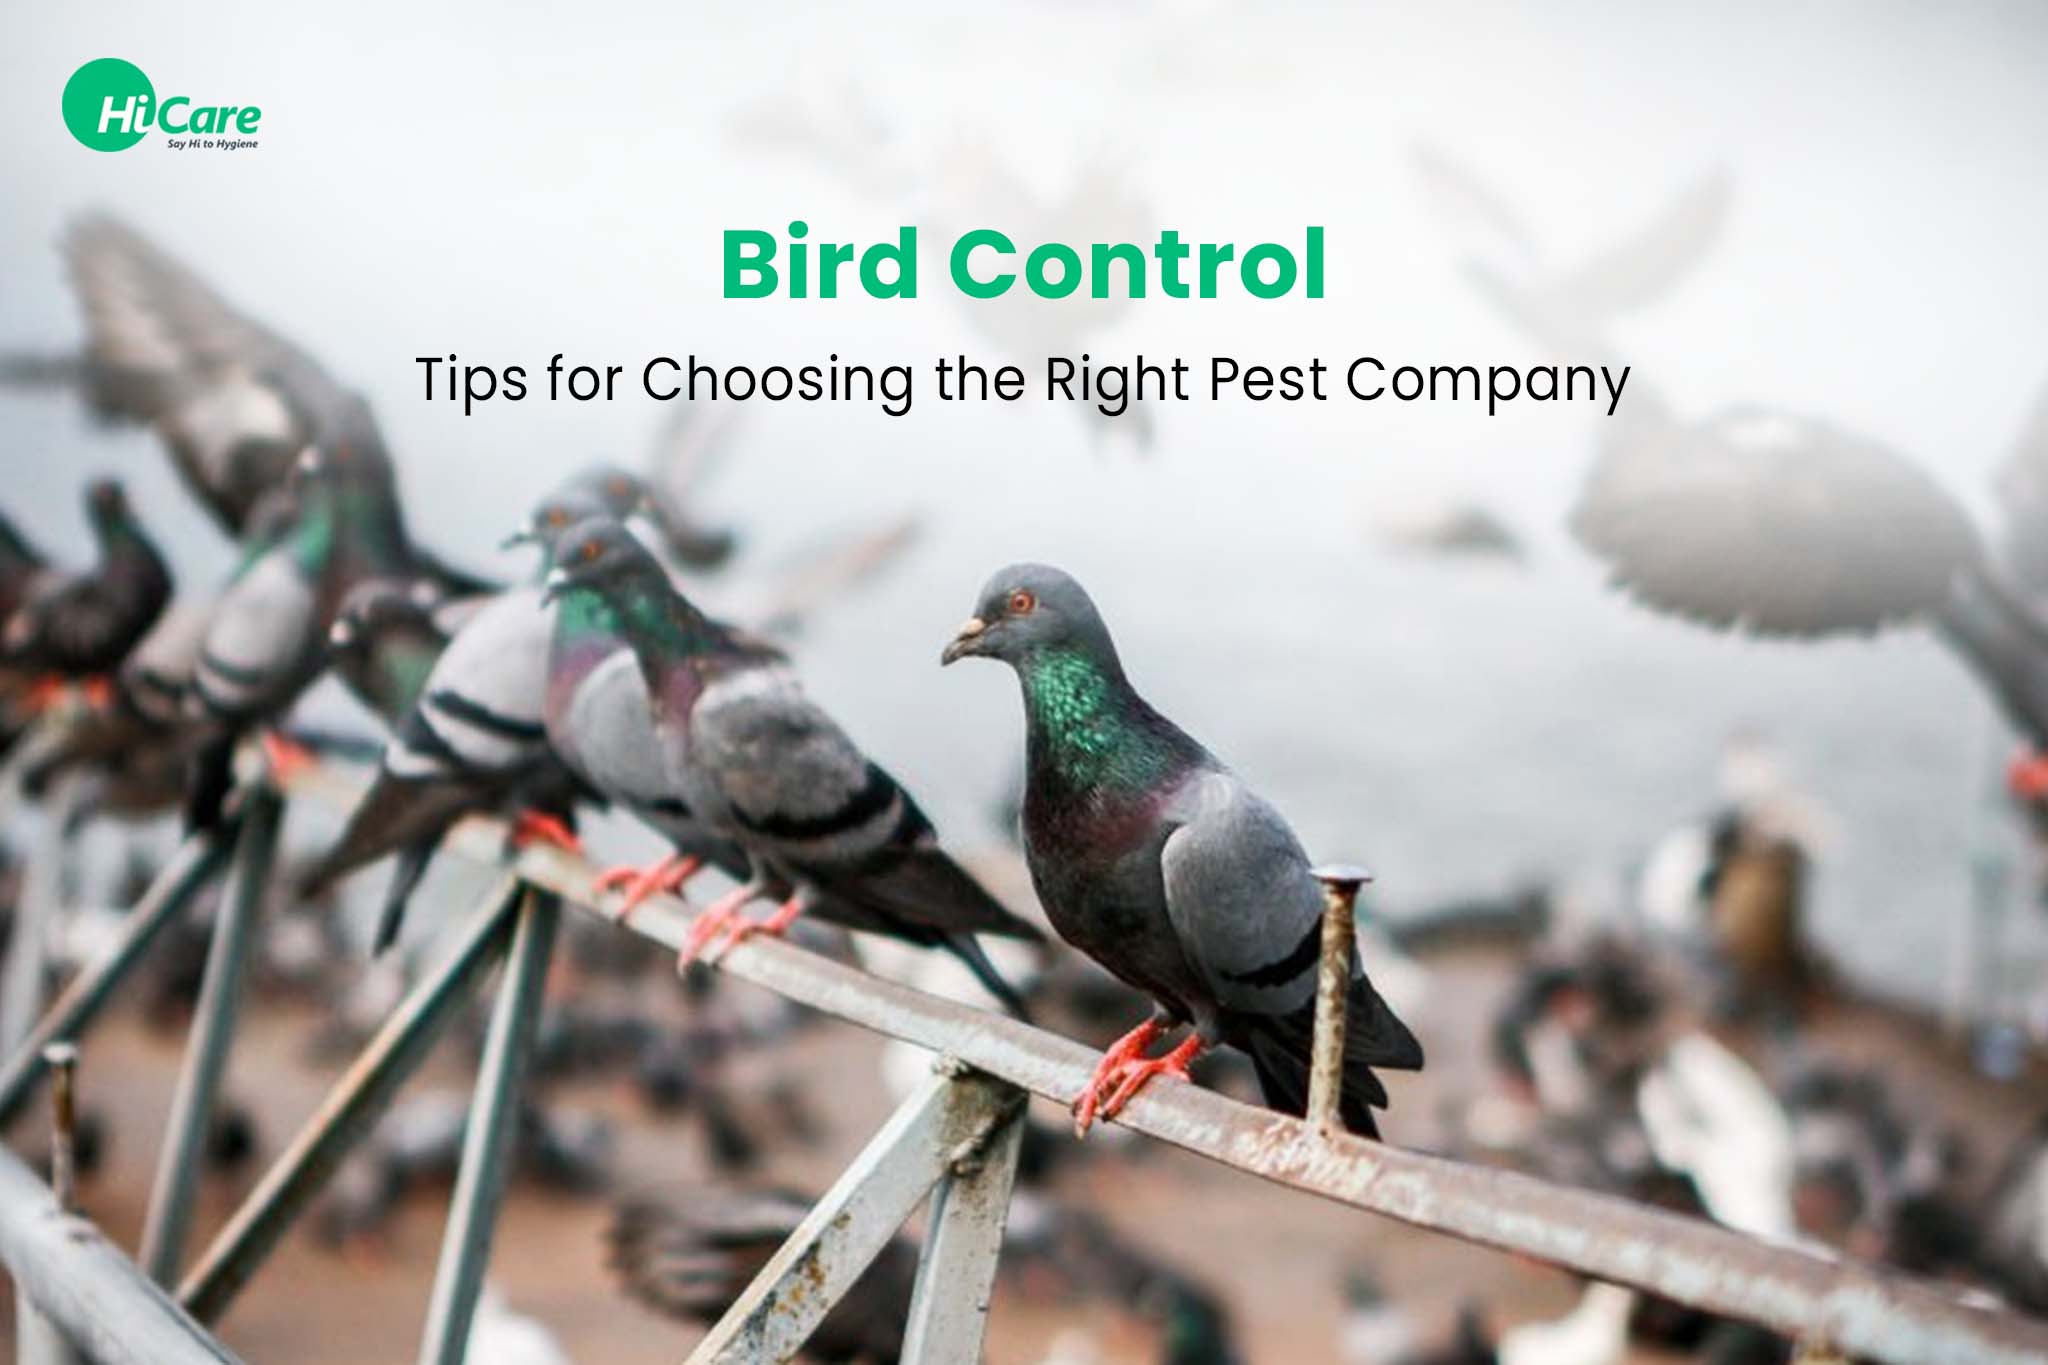 High Quality Anti-Bird Netting Solutions - Bird Net Experts